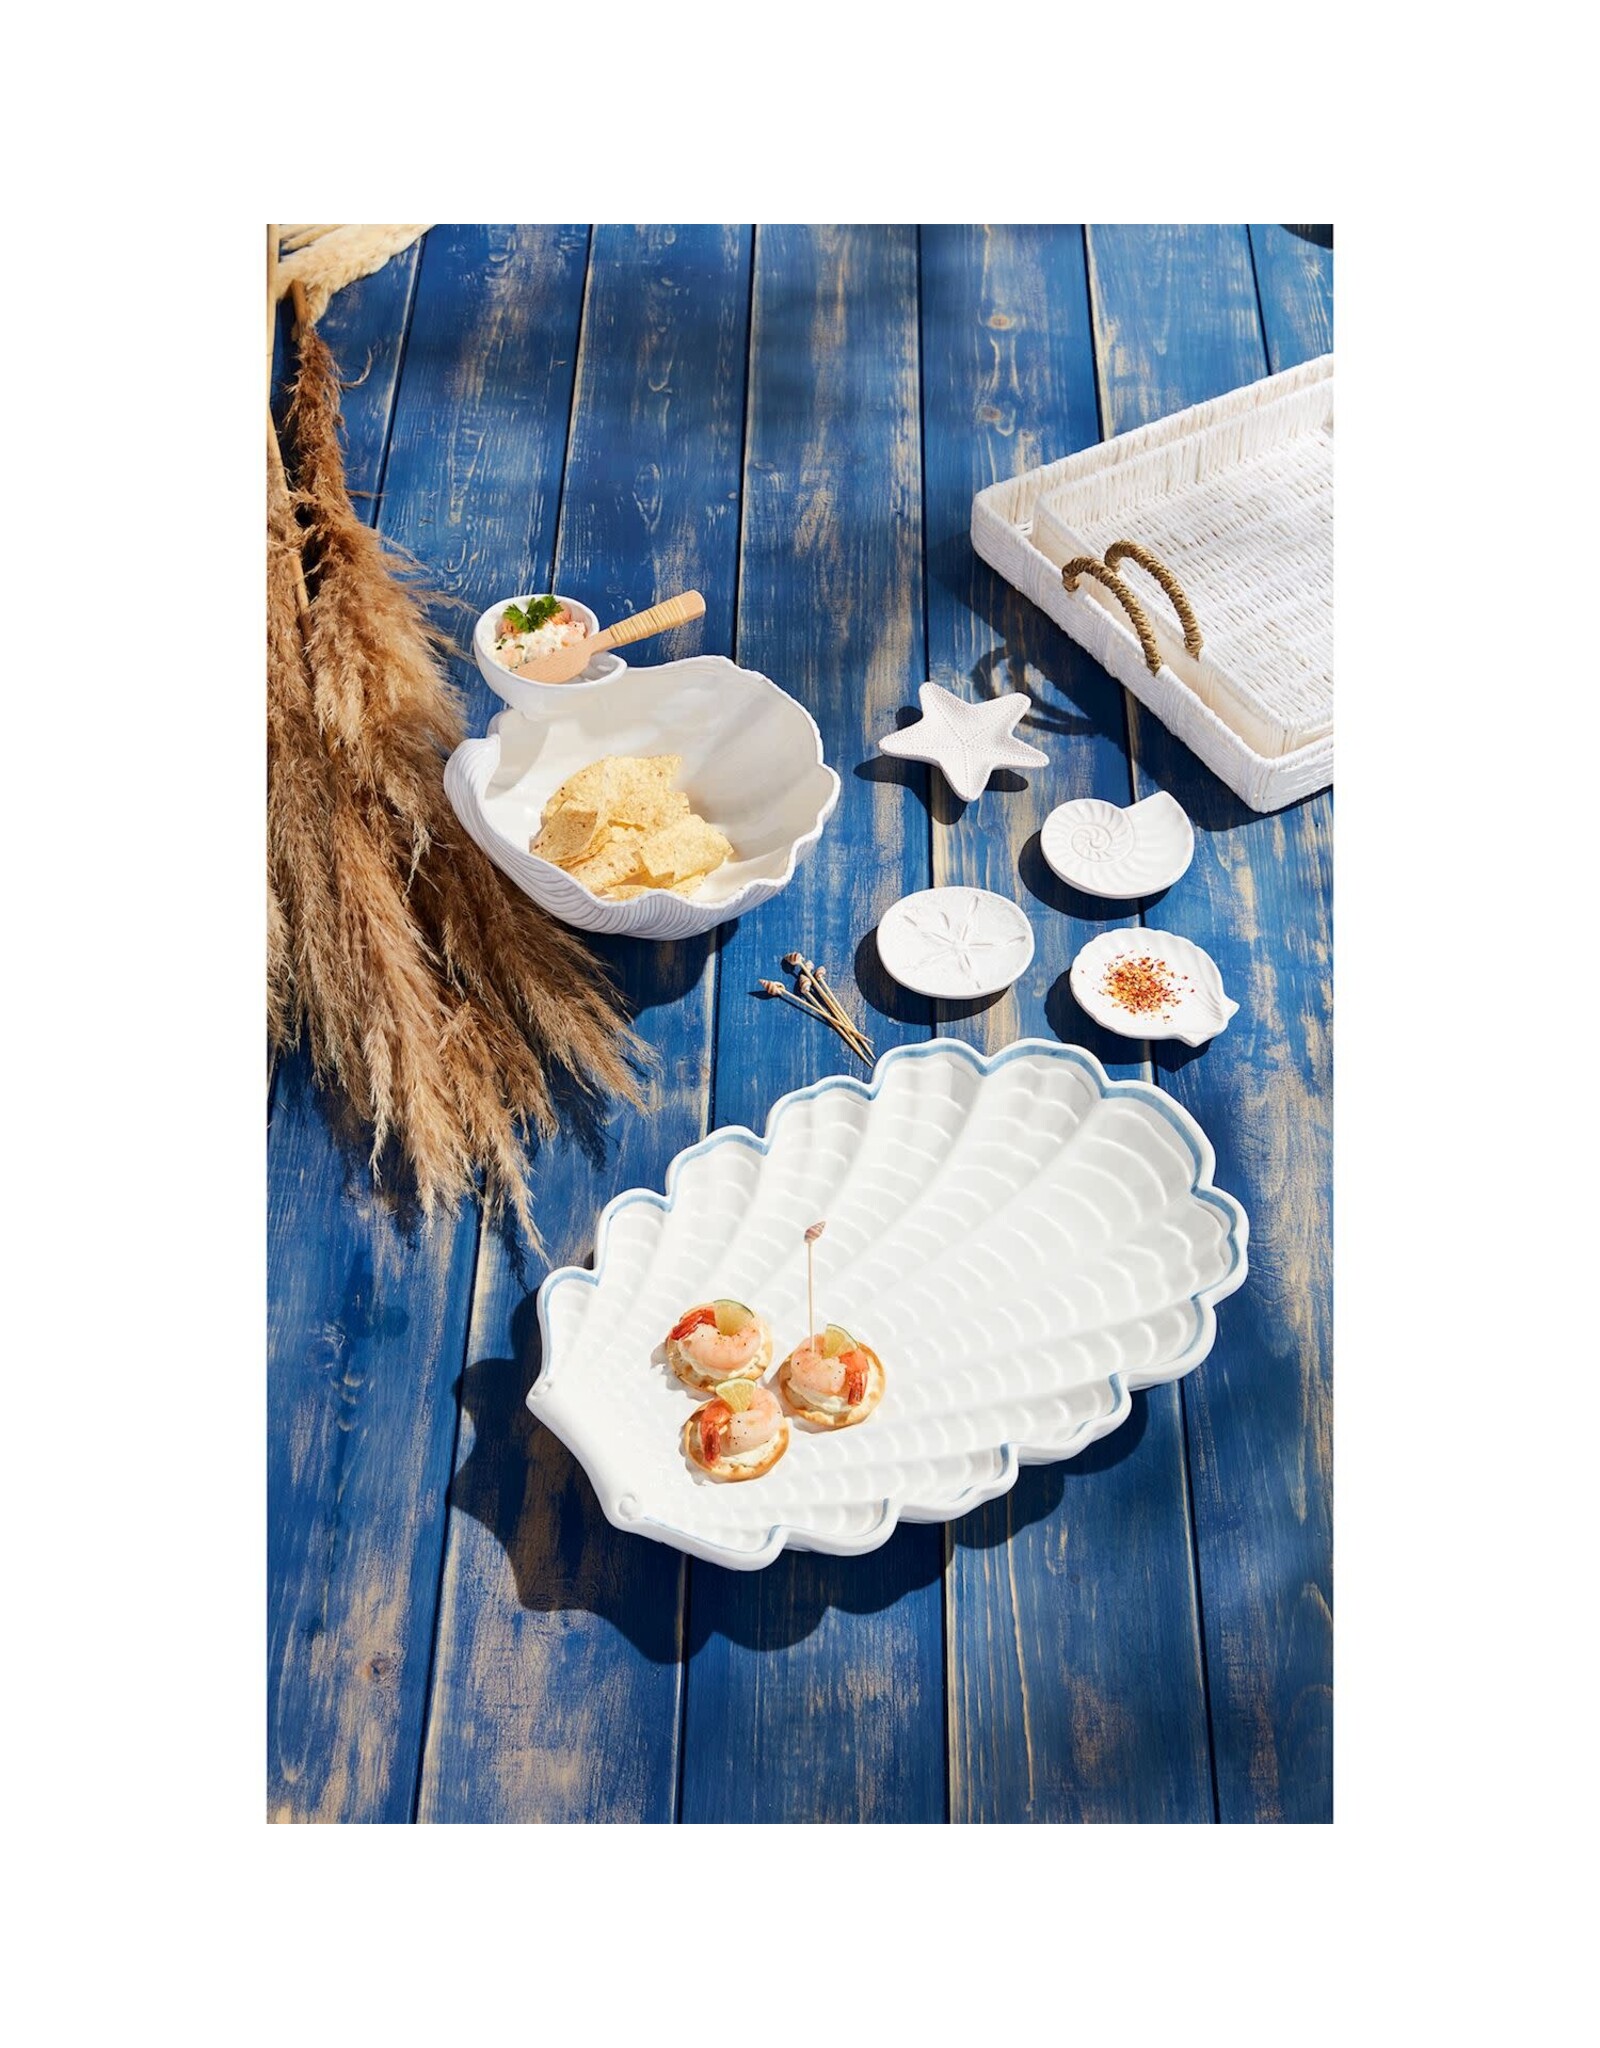 Mud Pie Sea Theme Tidbit Plates | Starfish Appetizer Plate